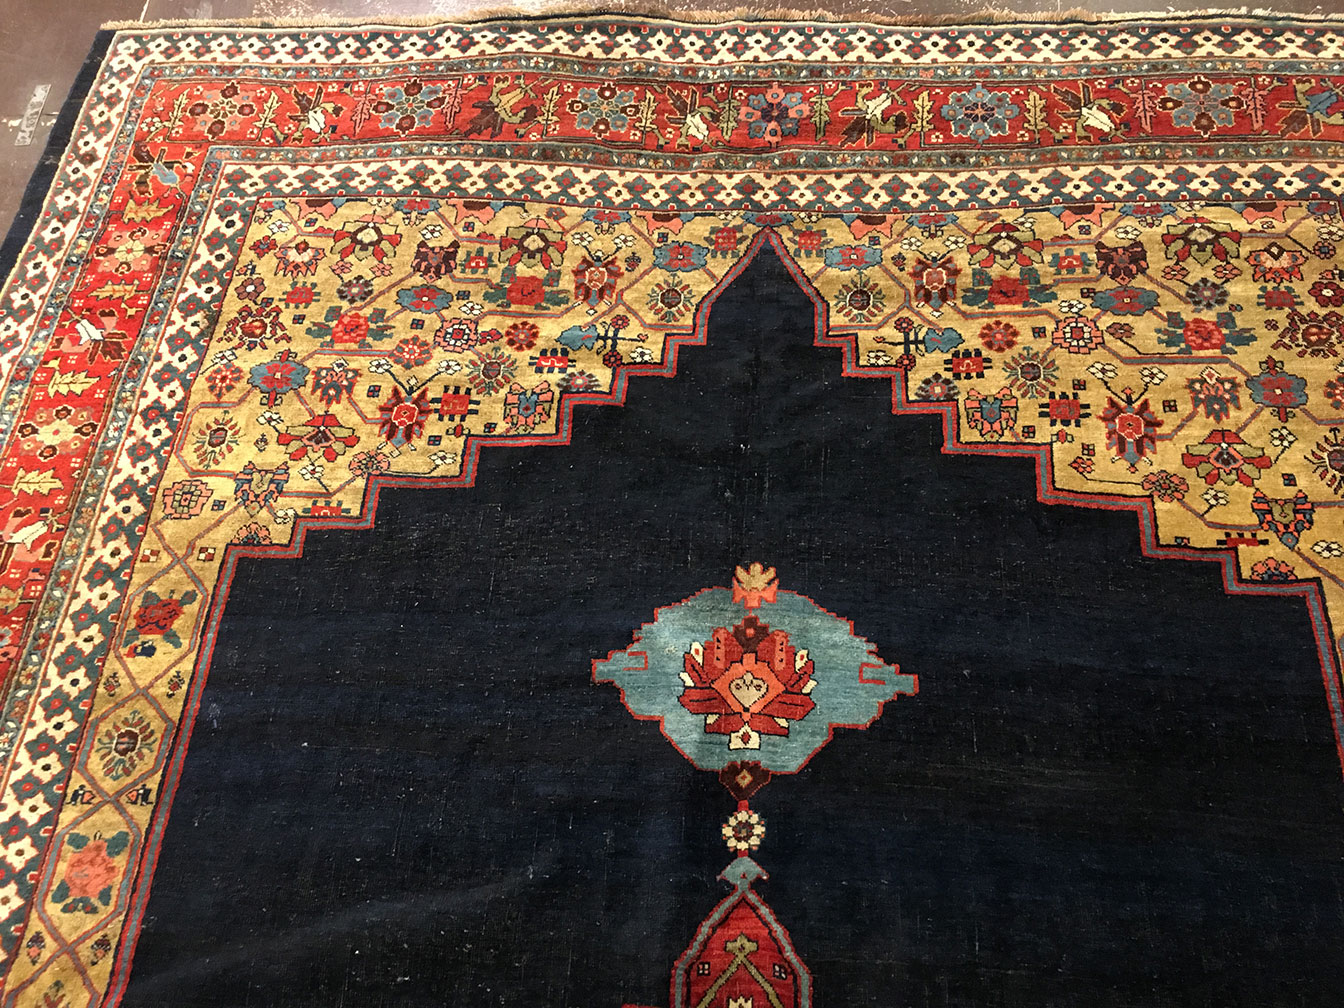 Antique bidjar Carpet - # 80072